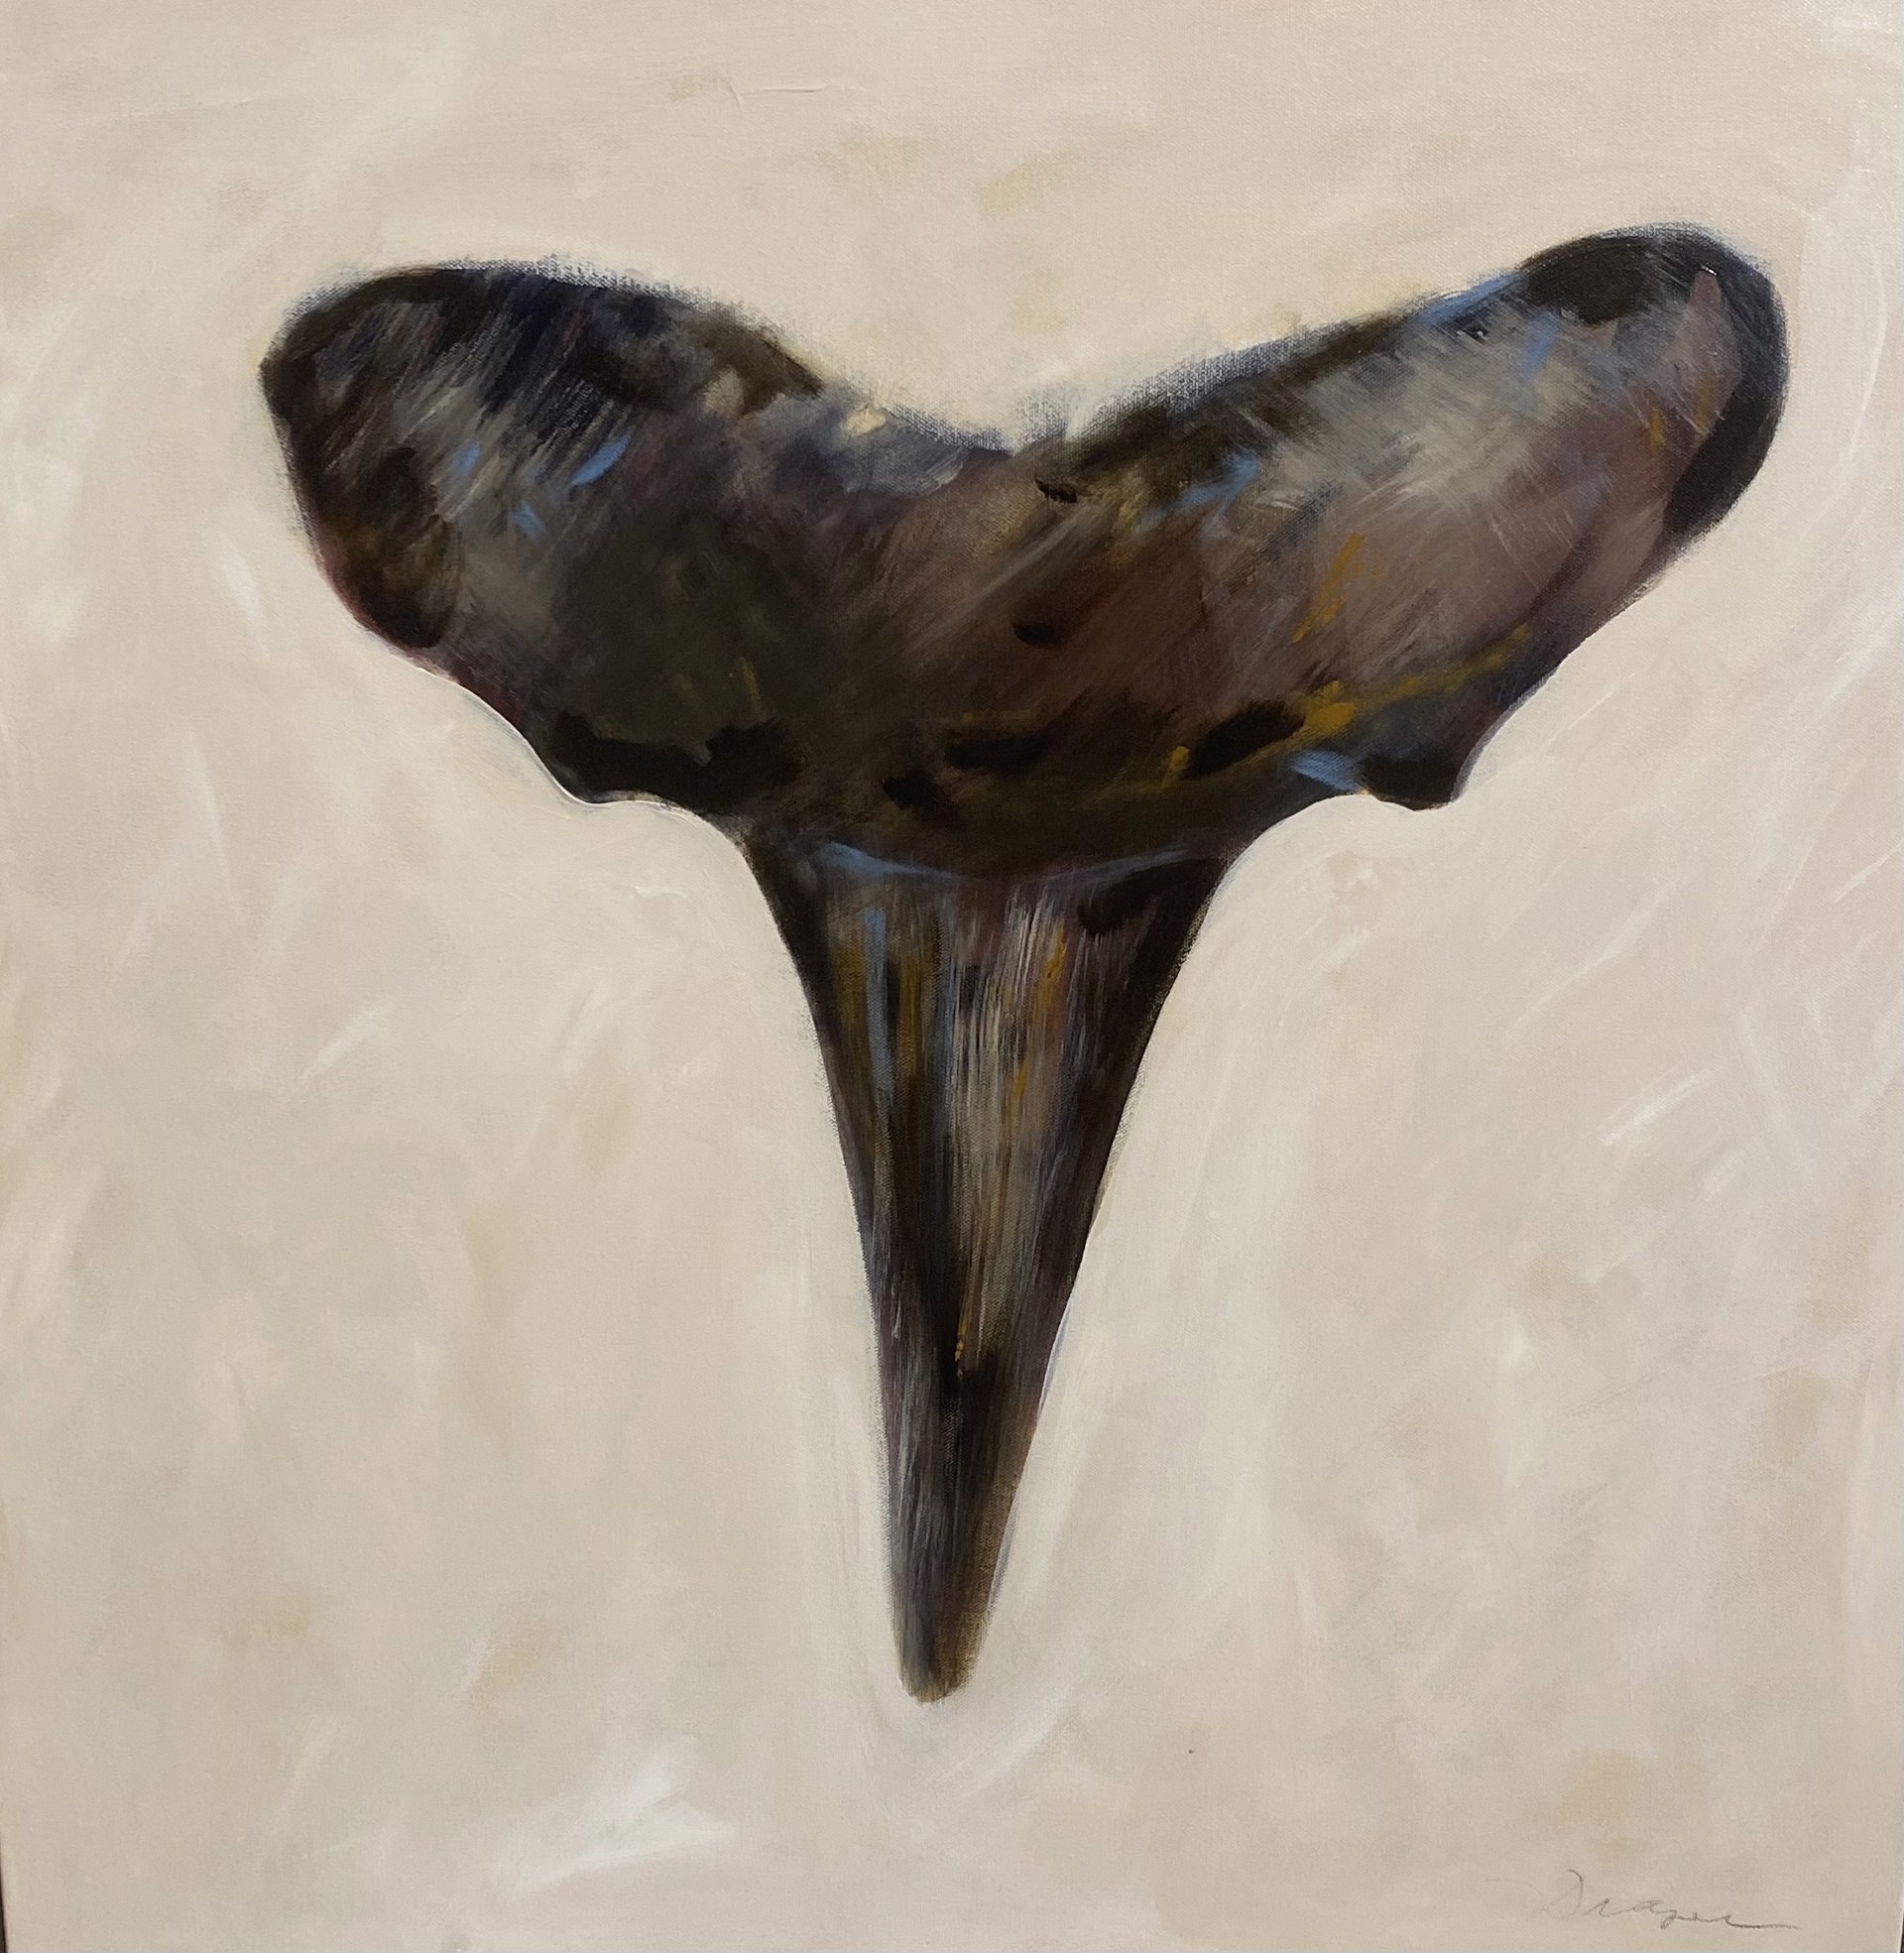 Black Sharks Teeth I by Jim Draper